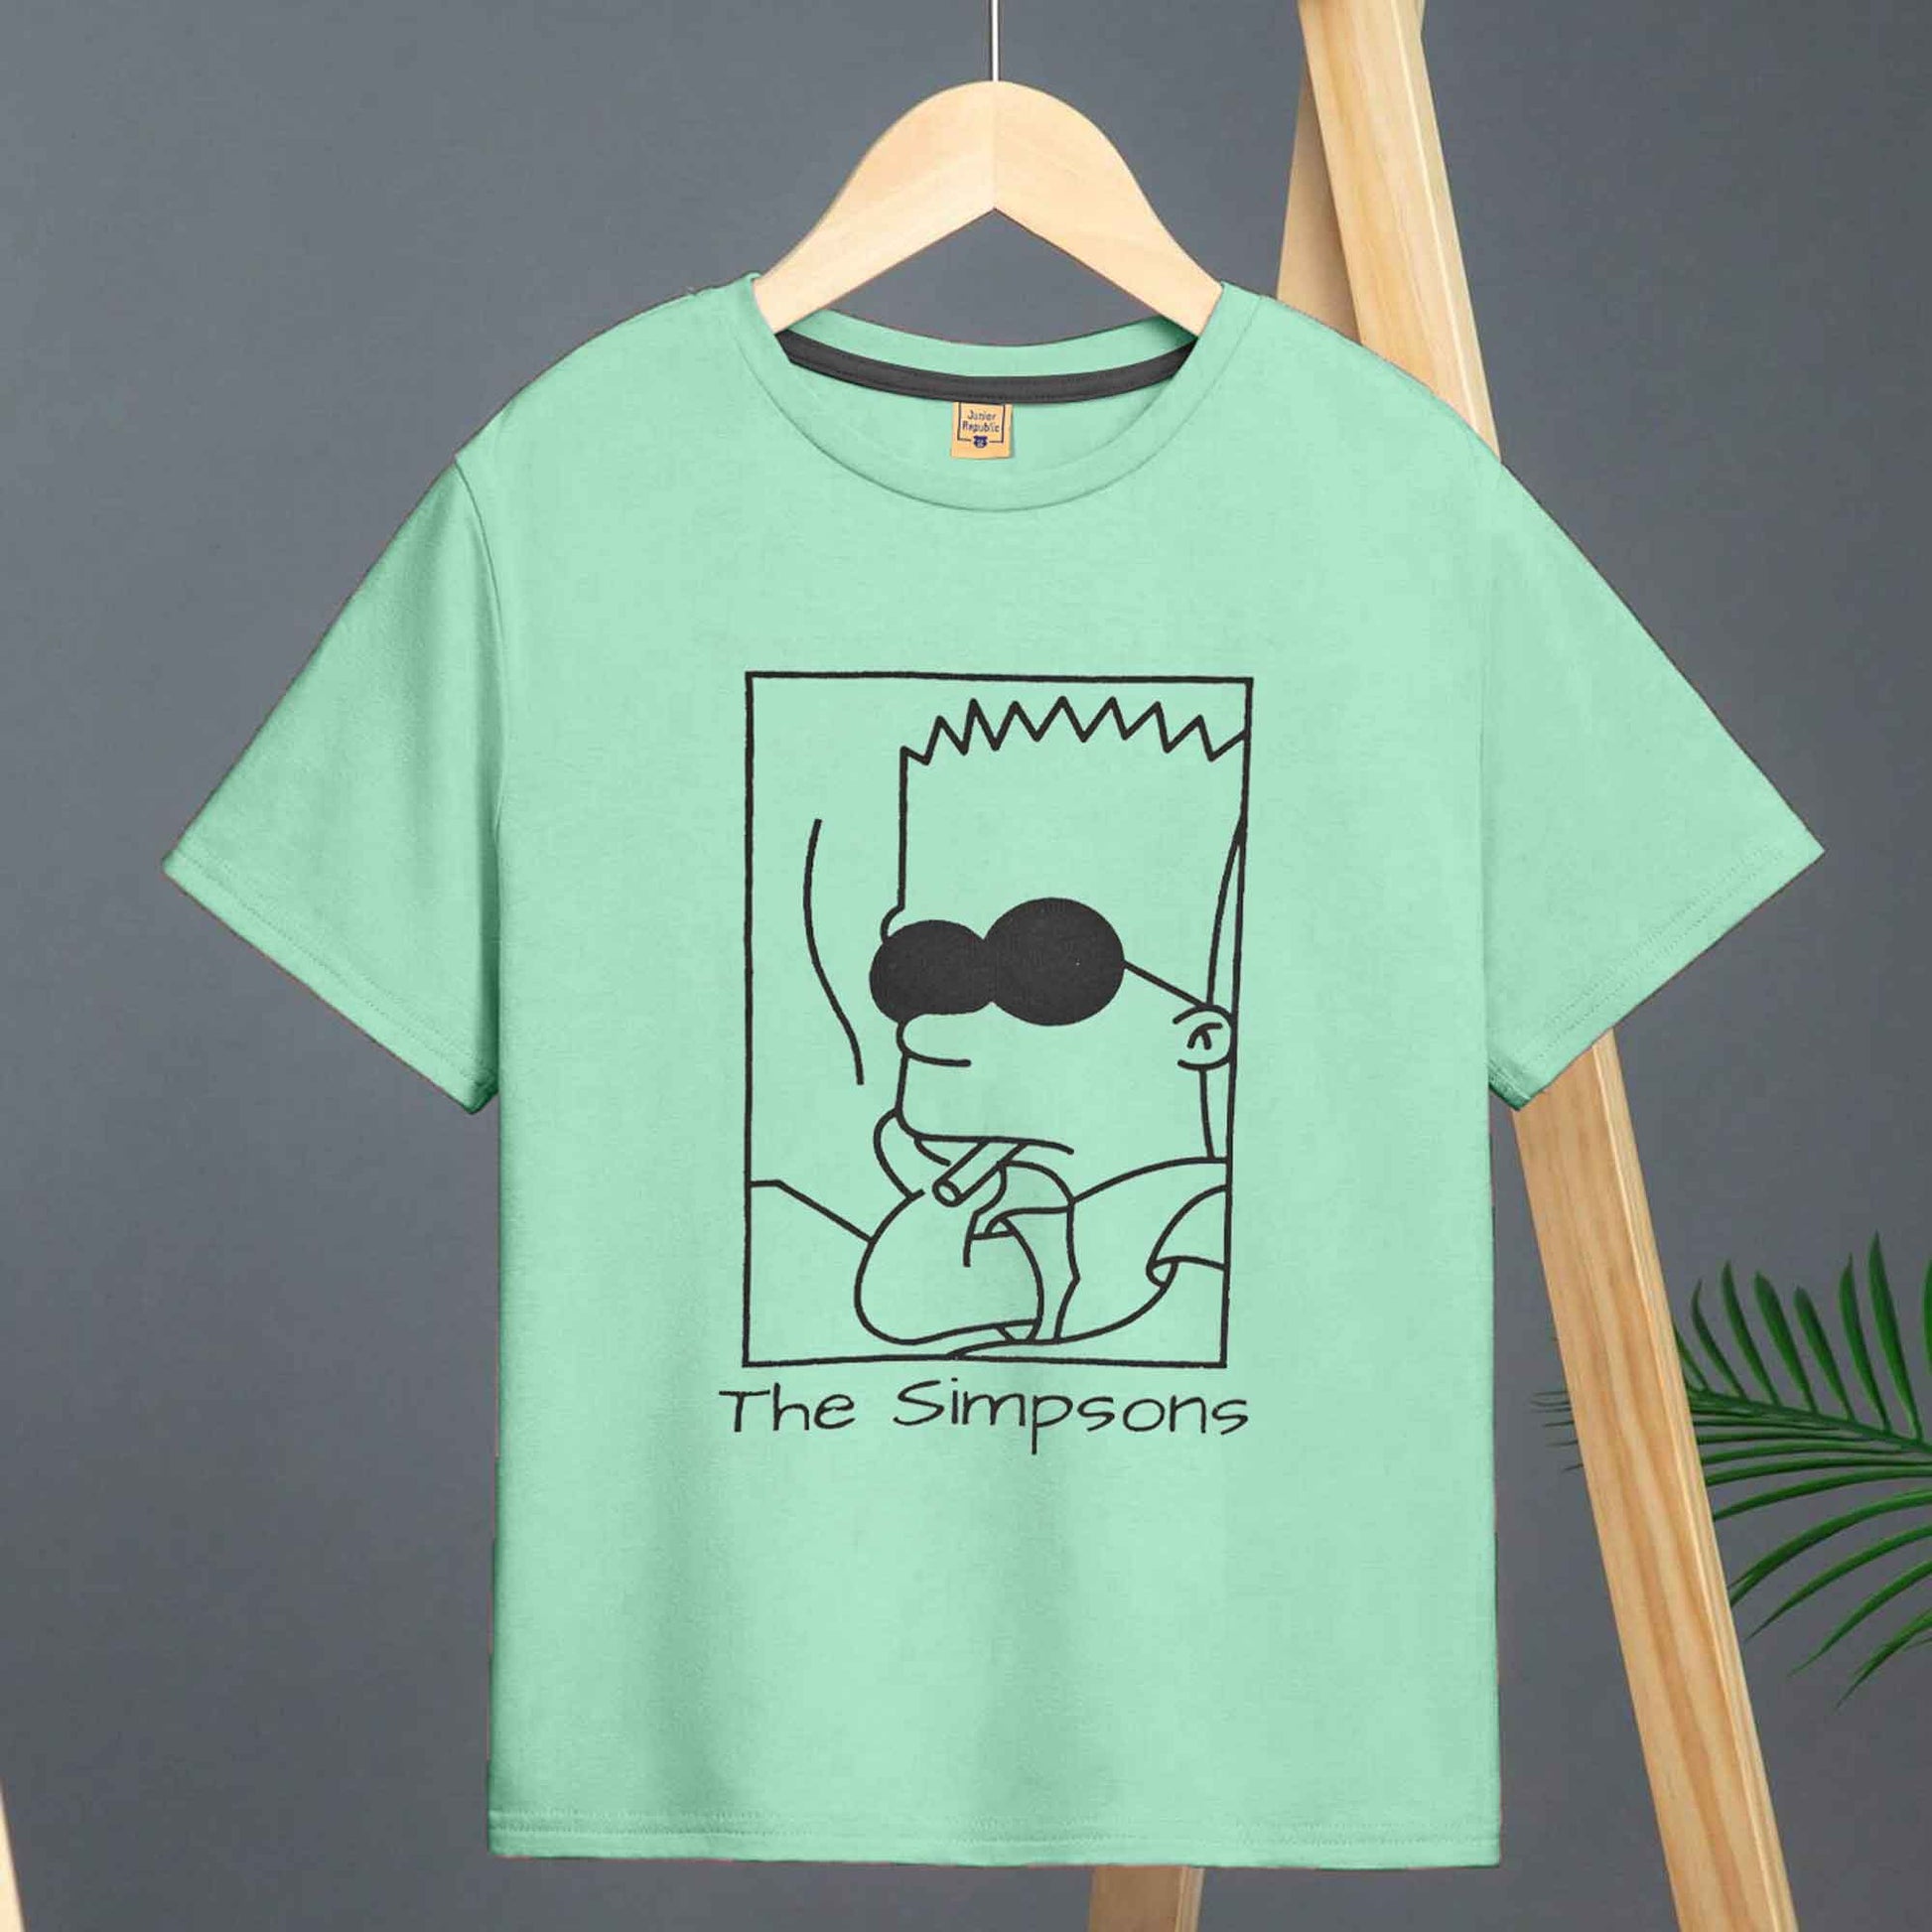 Junior Republic Kid's The Simpsons Printed Tee Shirt Boy's Tee Shirt JRR Turquoise 1-2 Years 